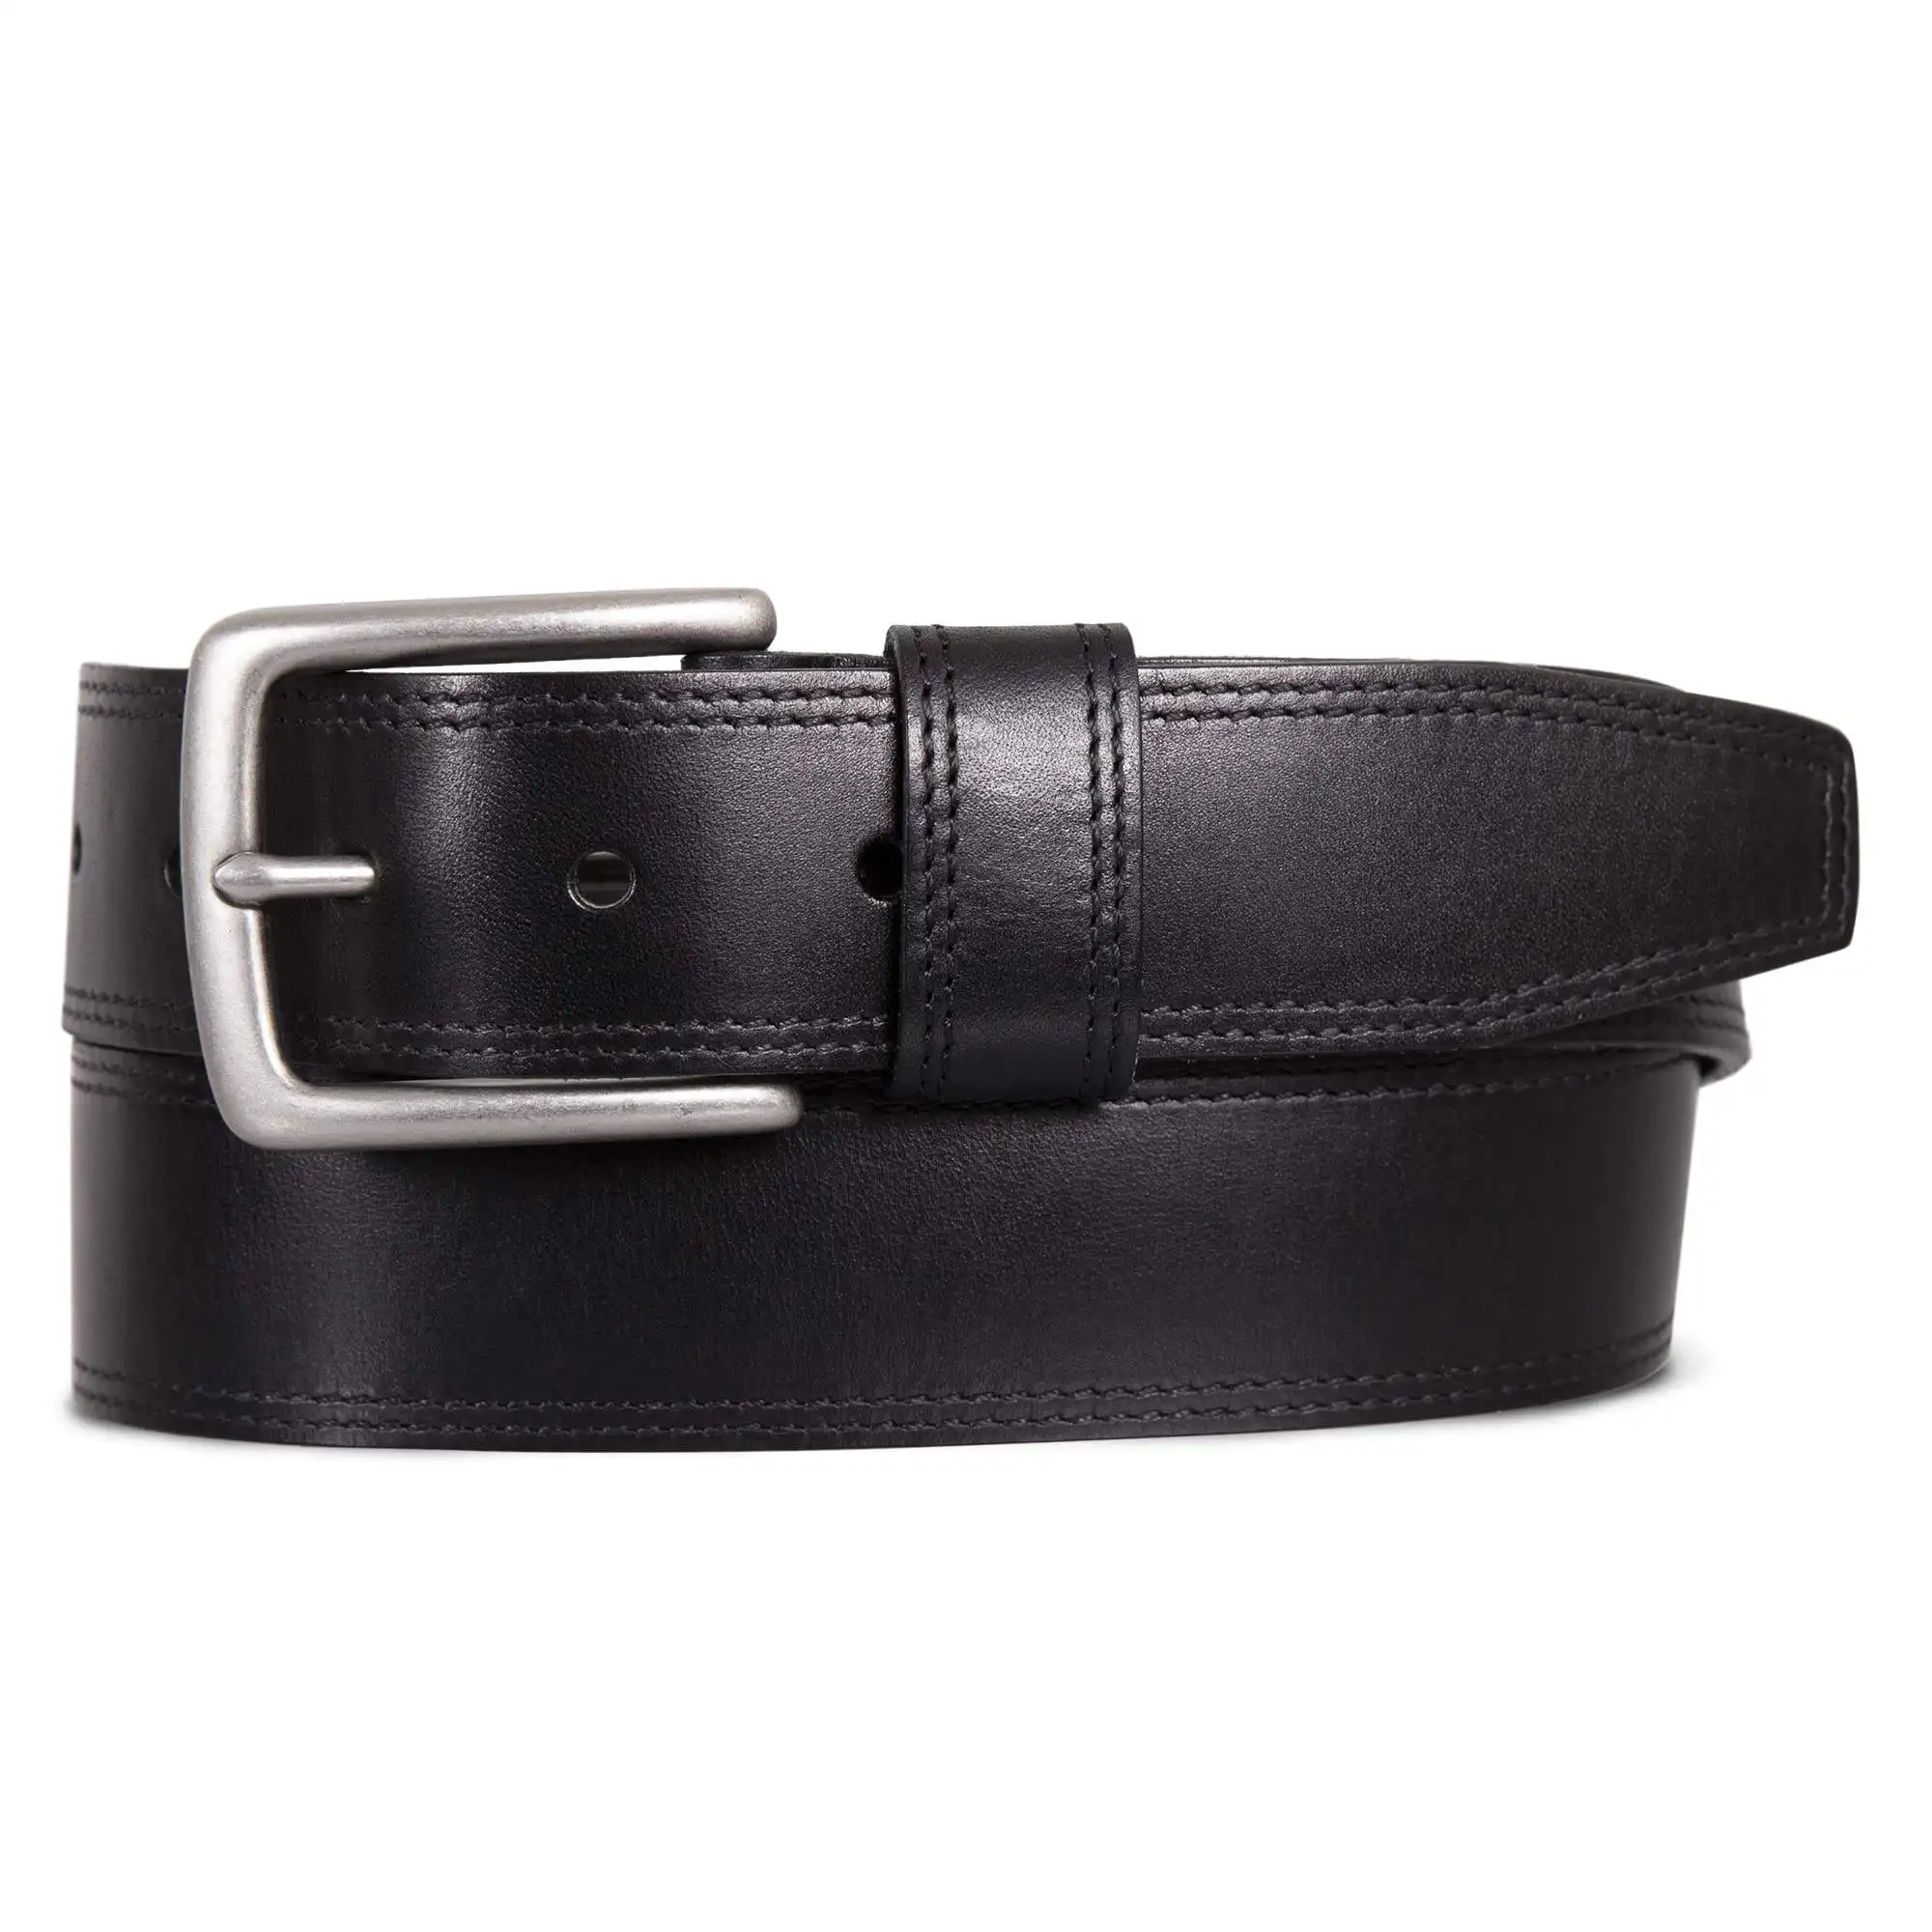 Leather belt for Man jeans wholesale Fashion Casual Adjustable Alloy pin Buckle belt genuine leather belt